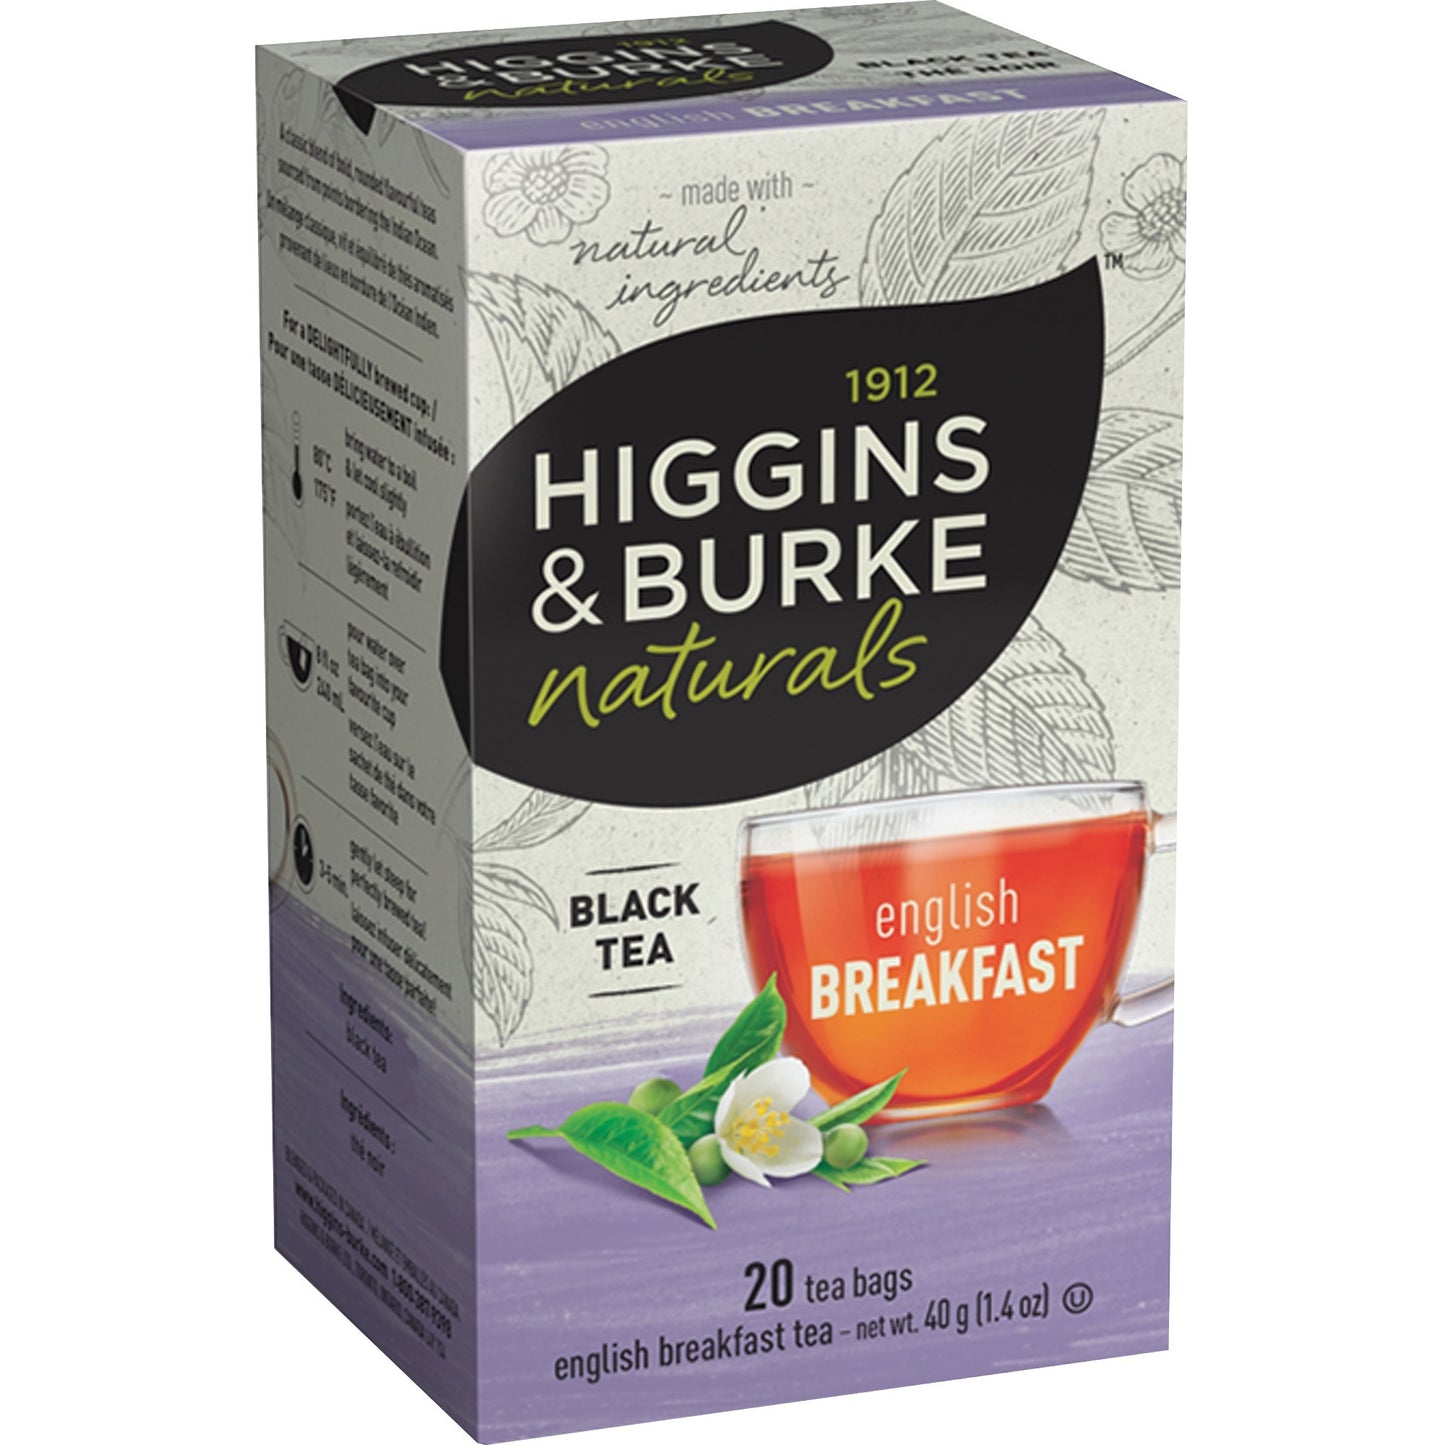 Higgins & Burke Naturals English Breakfast Black Tea Black Tea